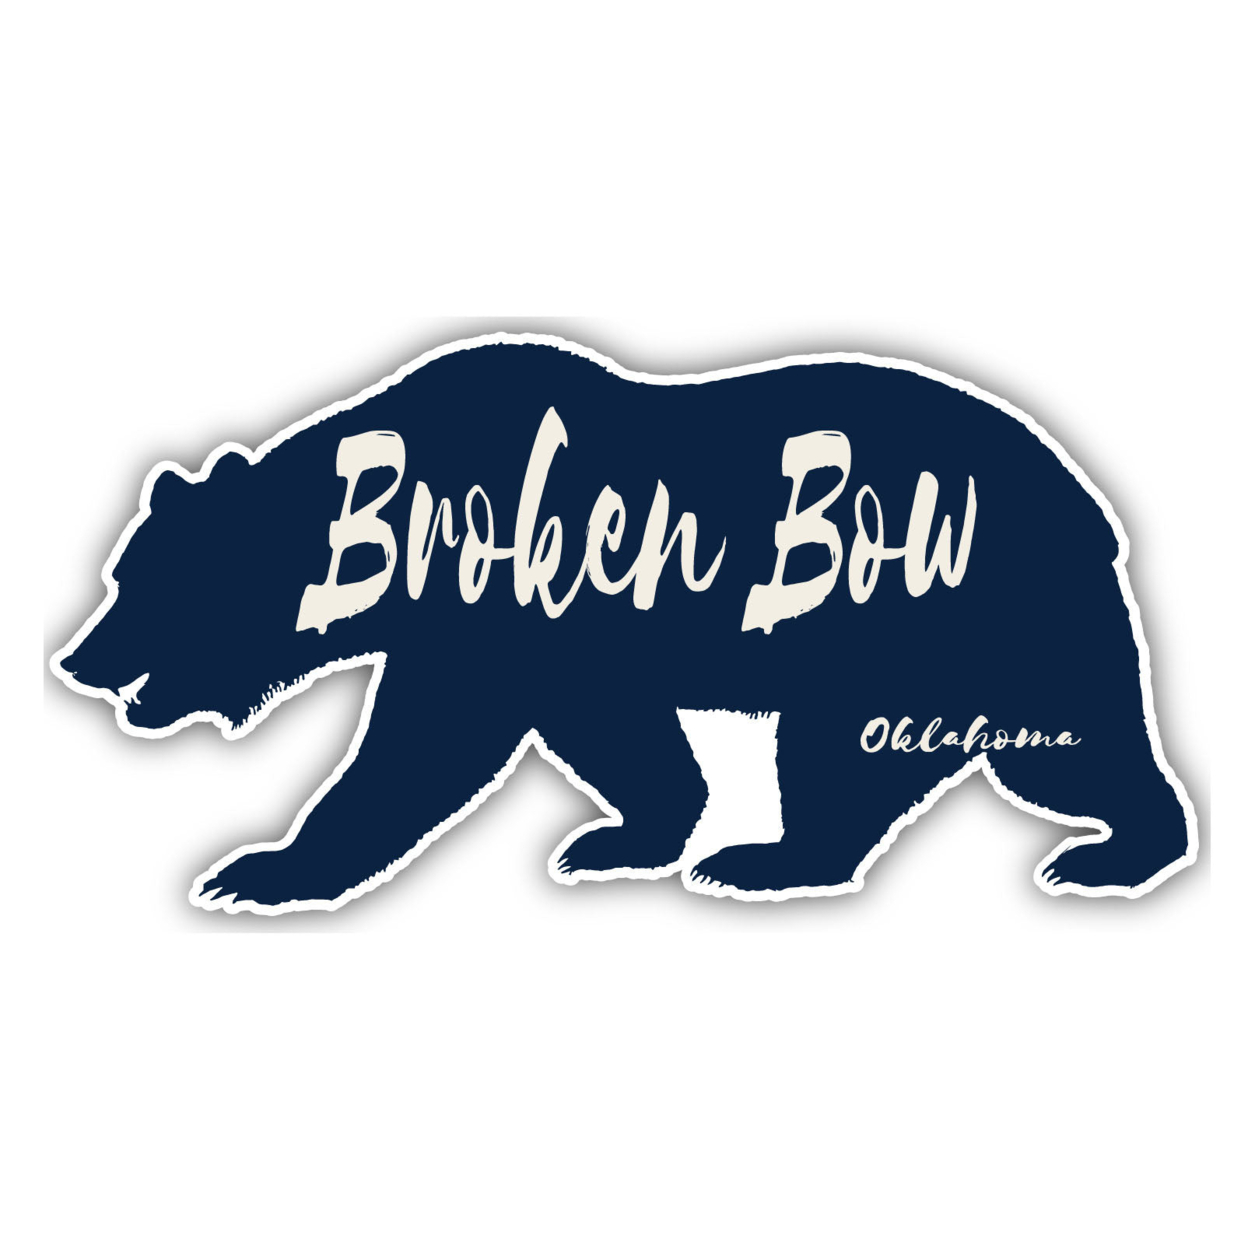 Broken Bow Oklahoma Souvenir Decorative Stickers (Choose Theme And Size) - Single Unit, 8-Inch, Bear